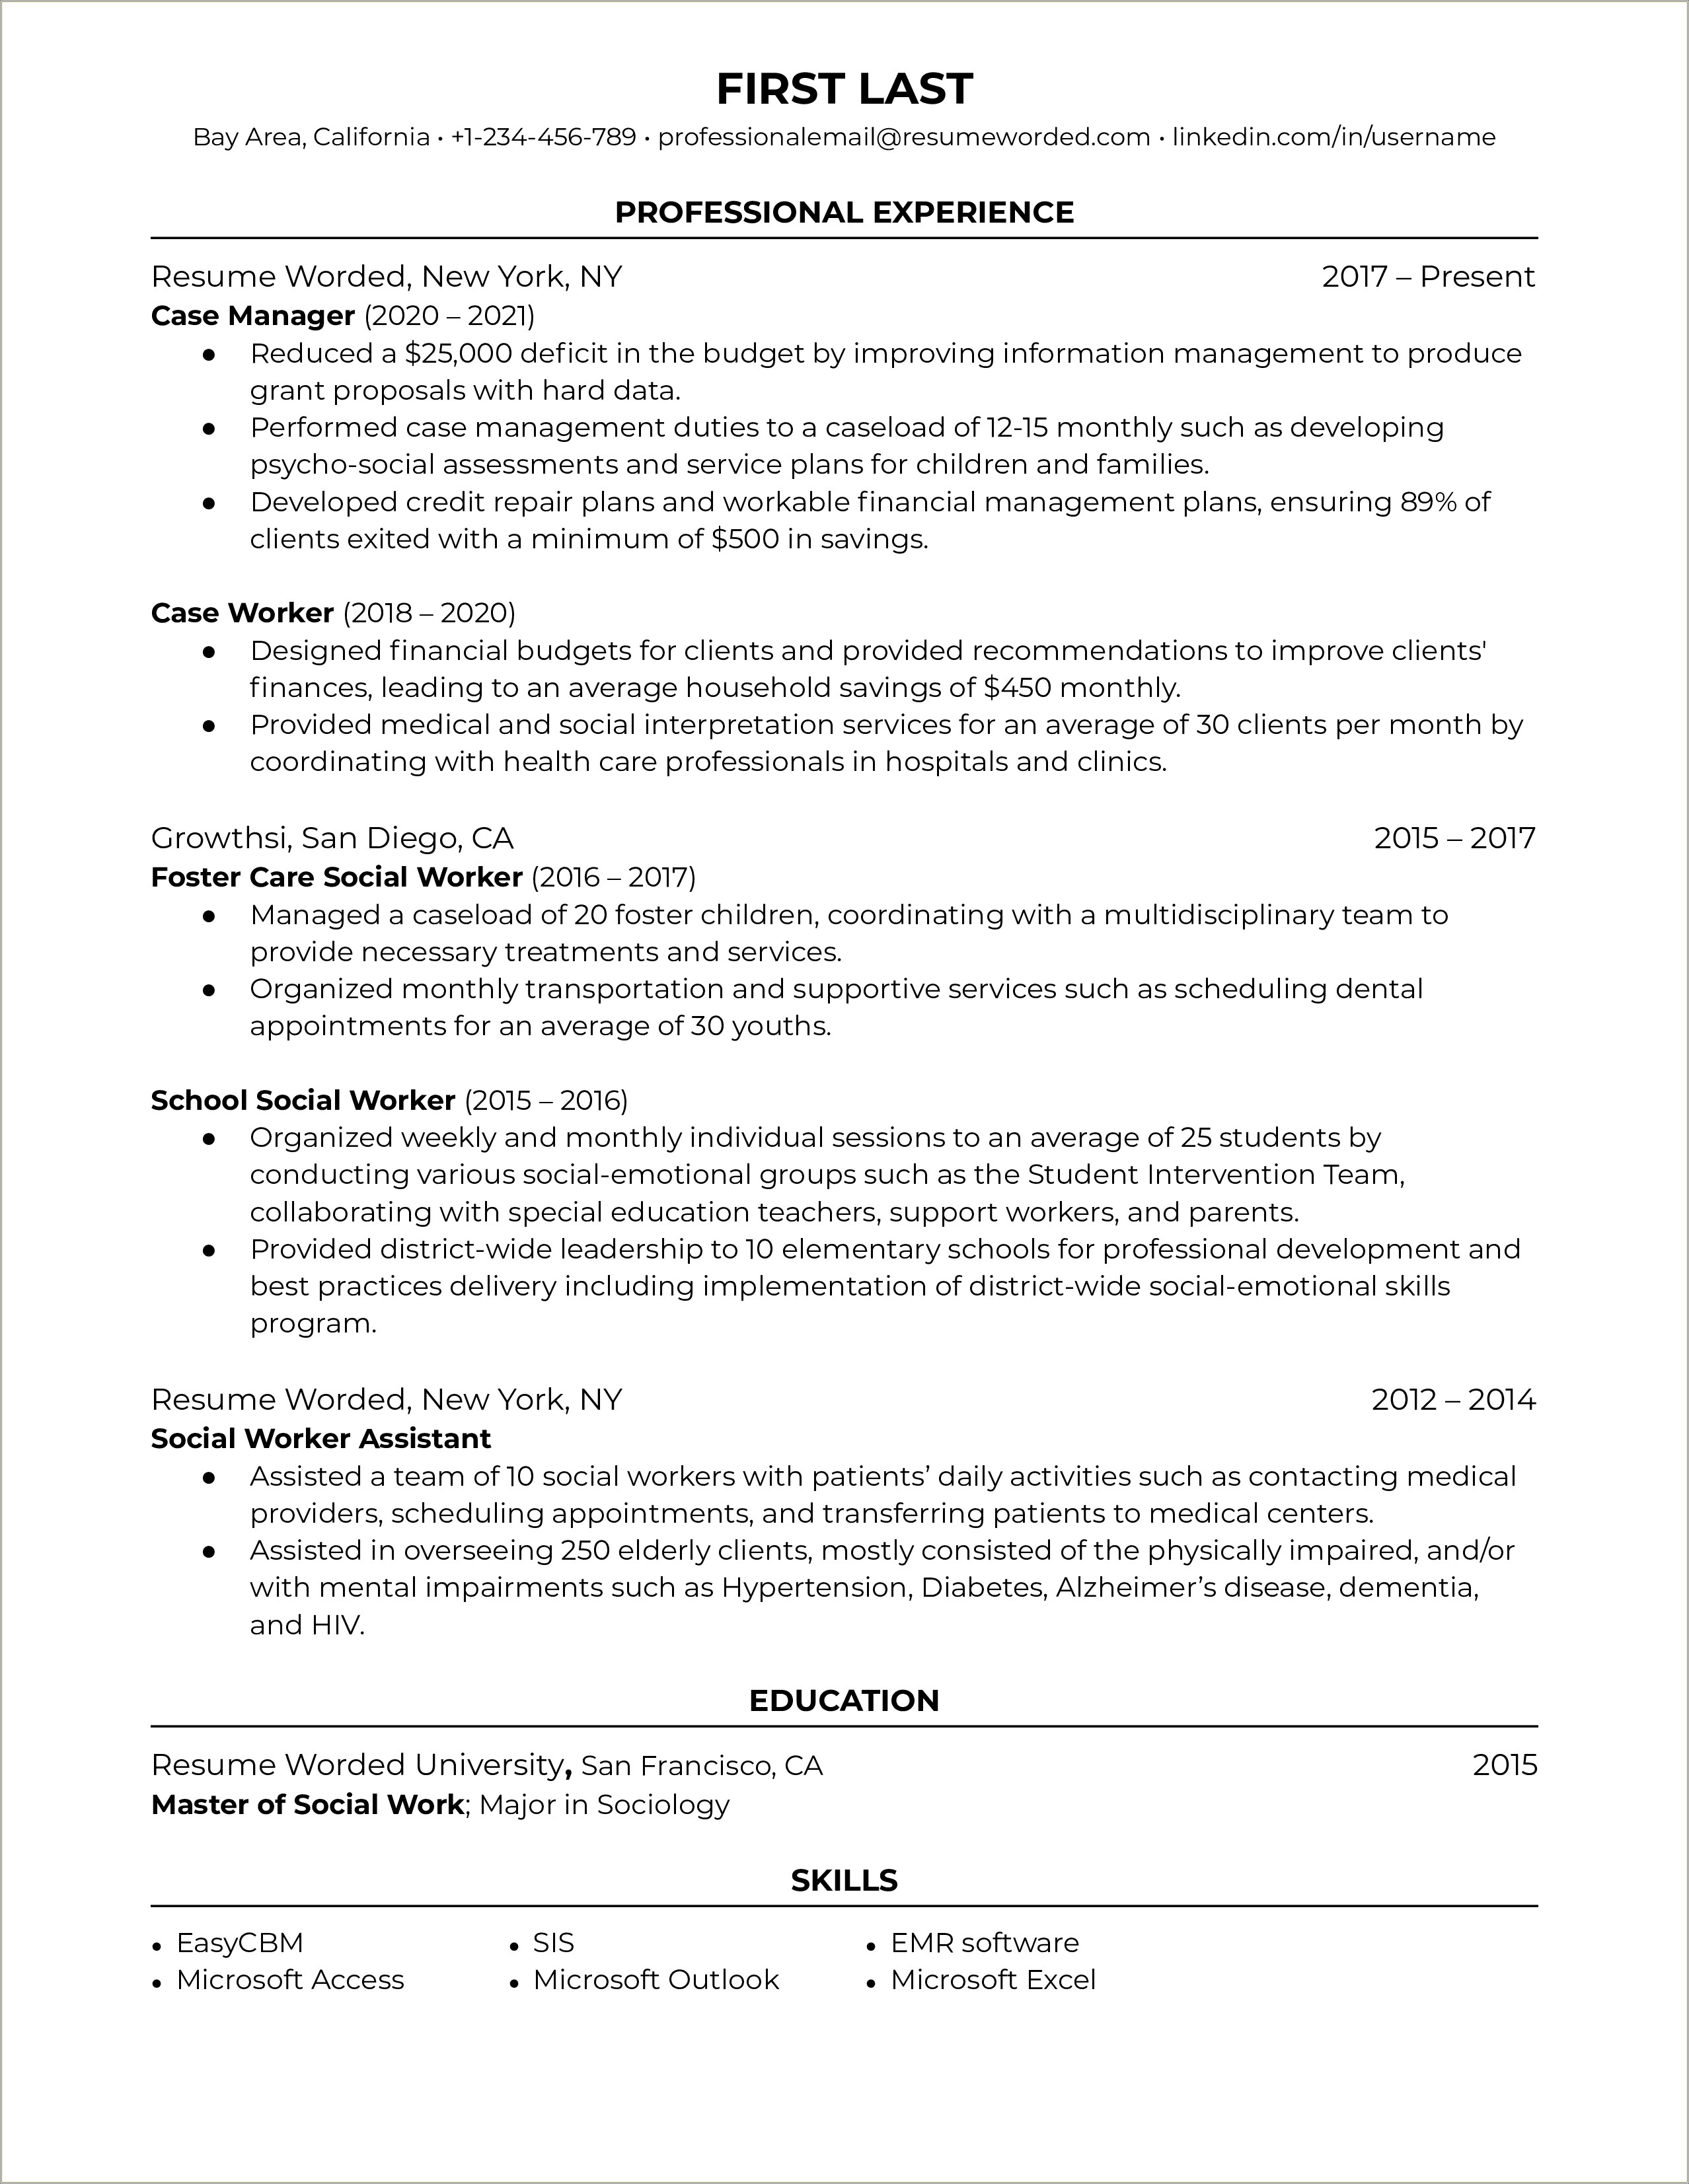 Case Manager Assistant Description For Resume